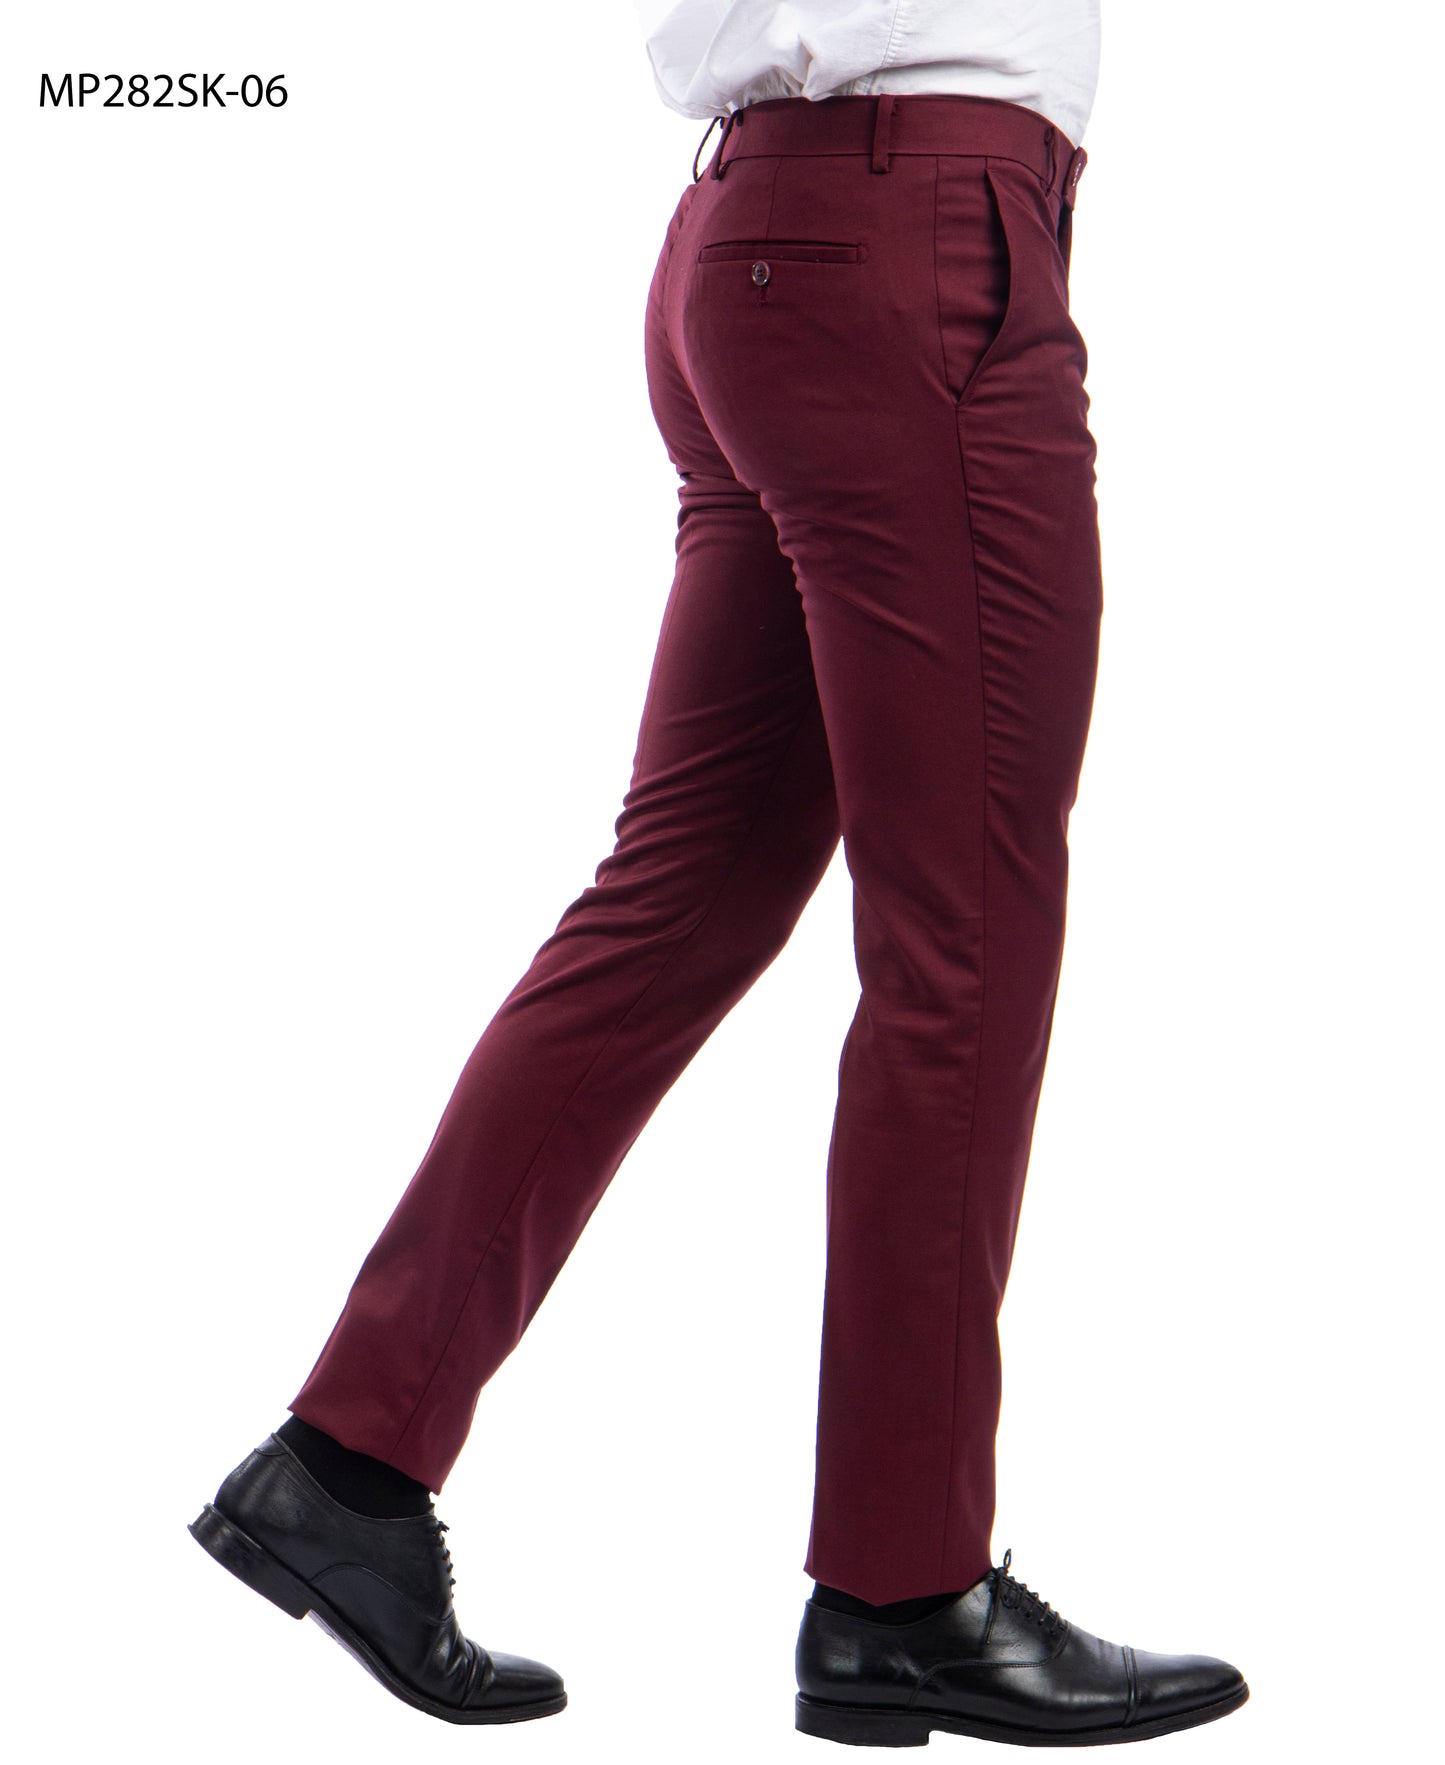 Sean Alexander Mens Burgundy Performance Stretch Dress Pants MP282SK-06